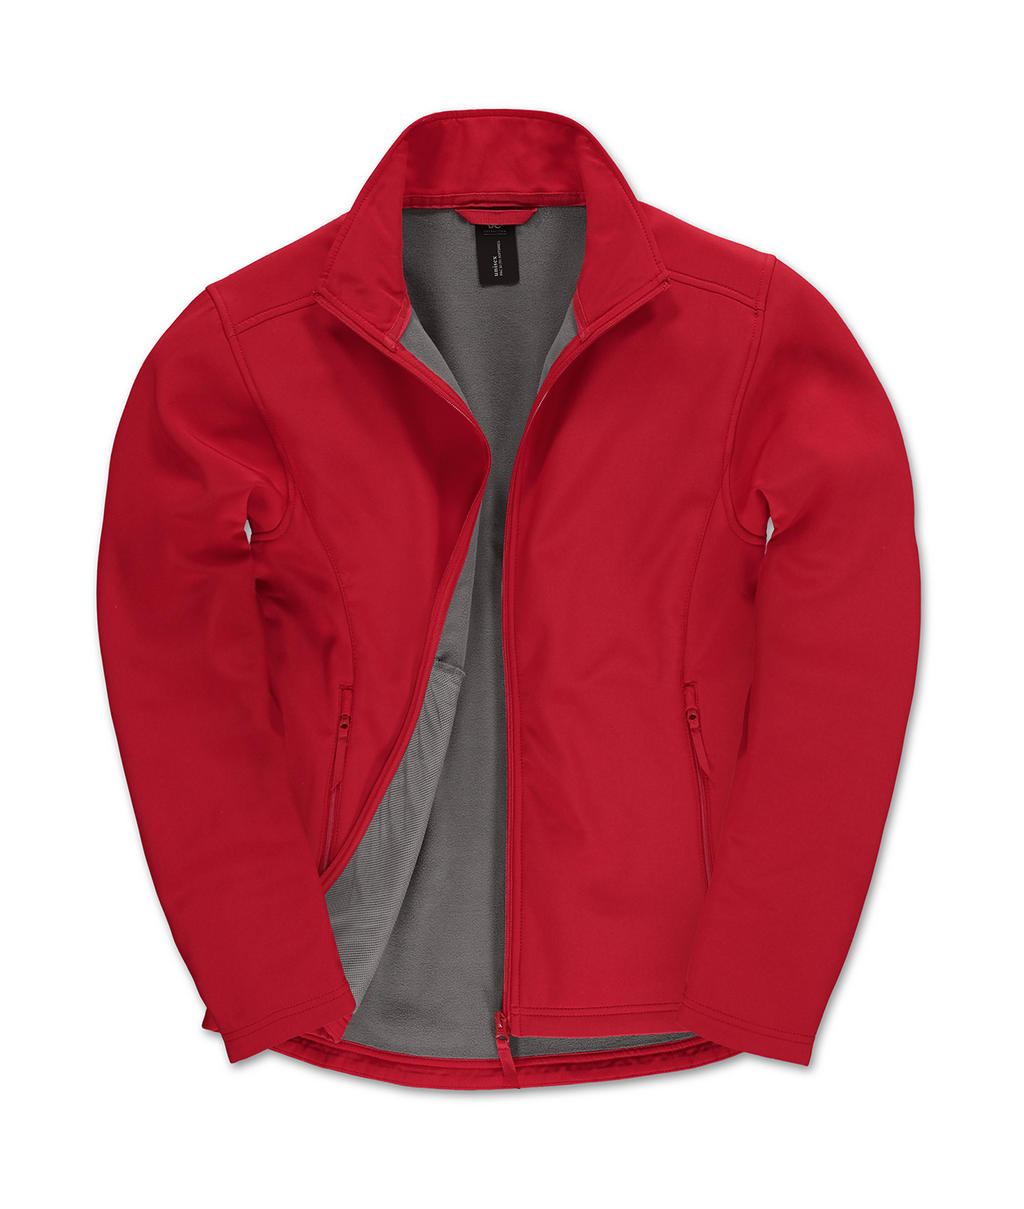  ID.701 Softshell Jacket in Farbe Red/Warm Grey